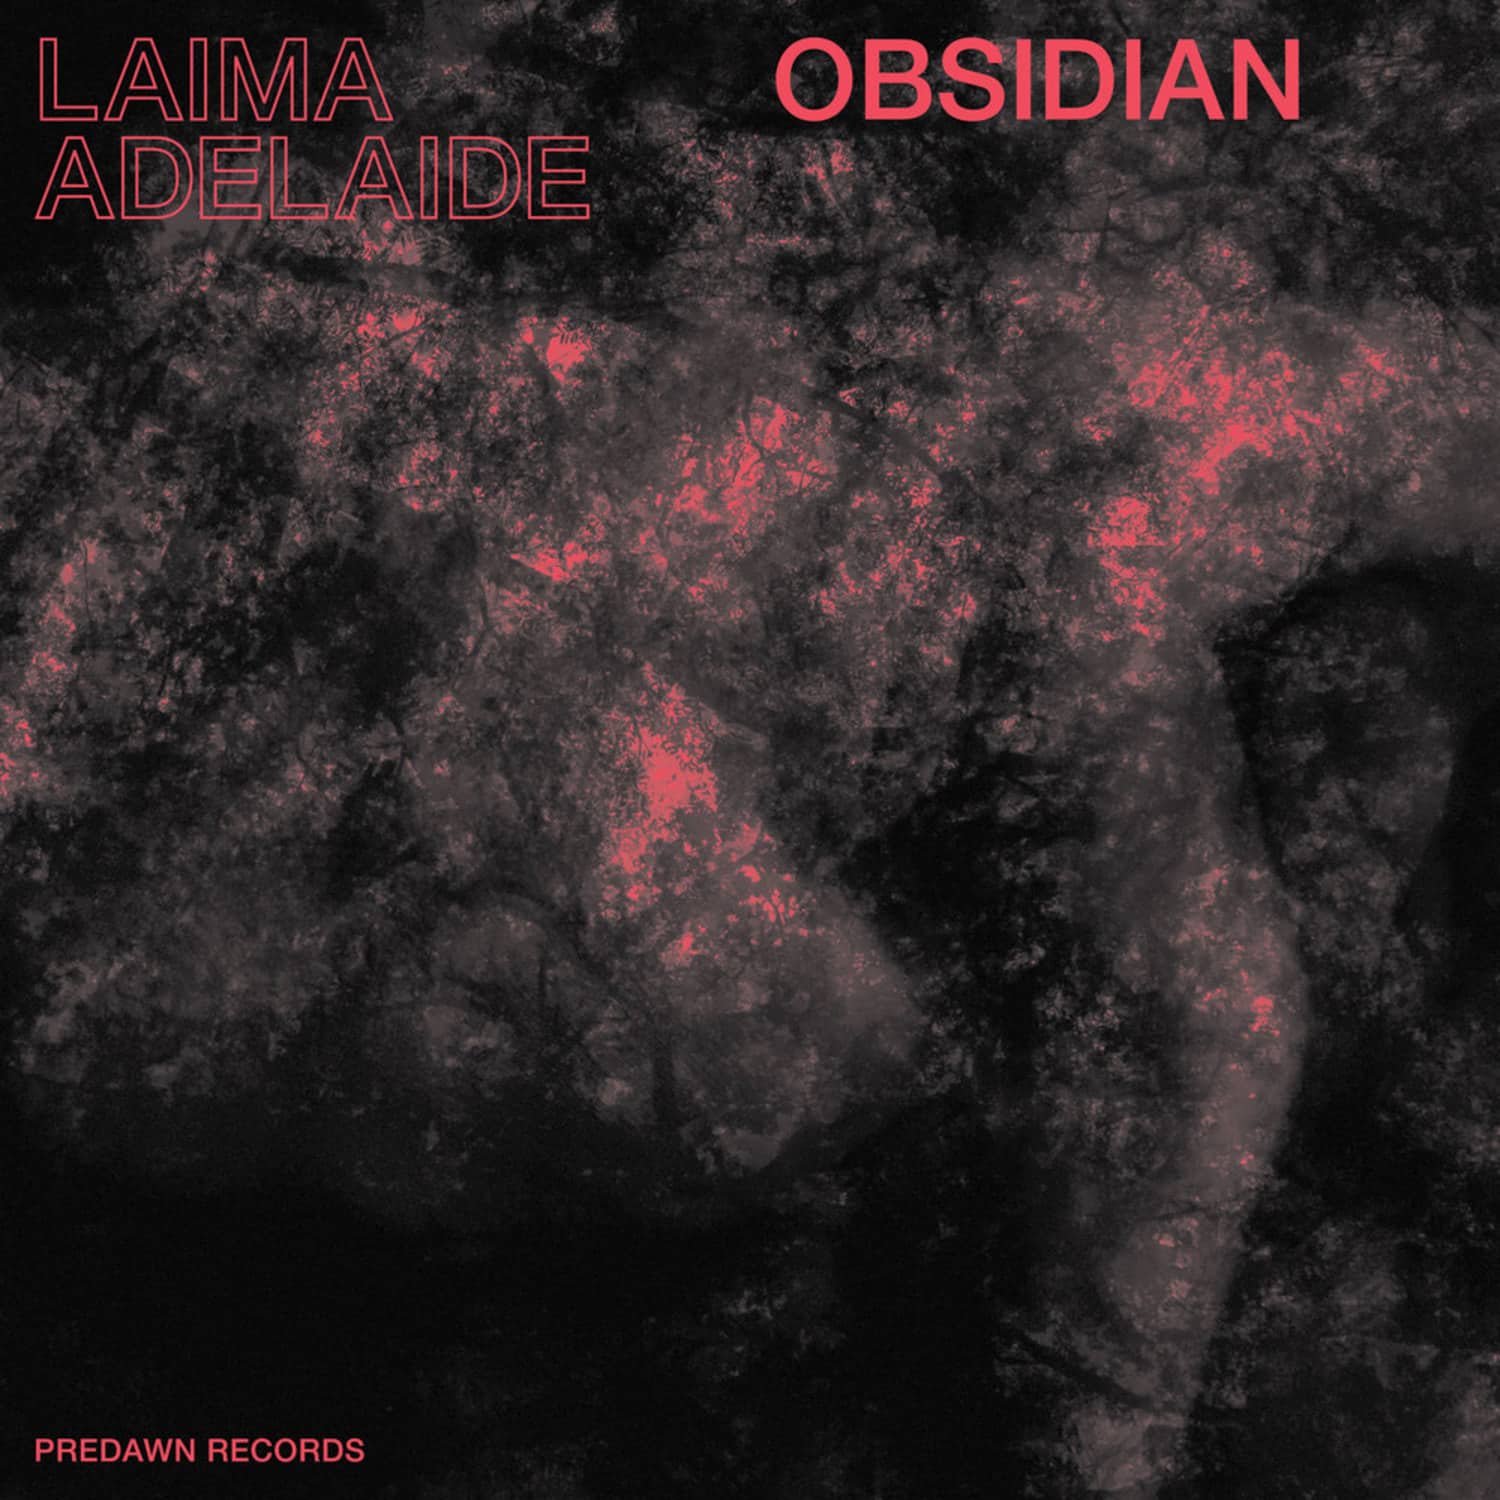 Laima Adelaide - OBSIDIAN EP